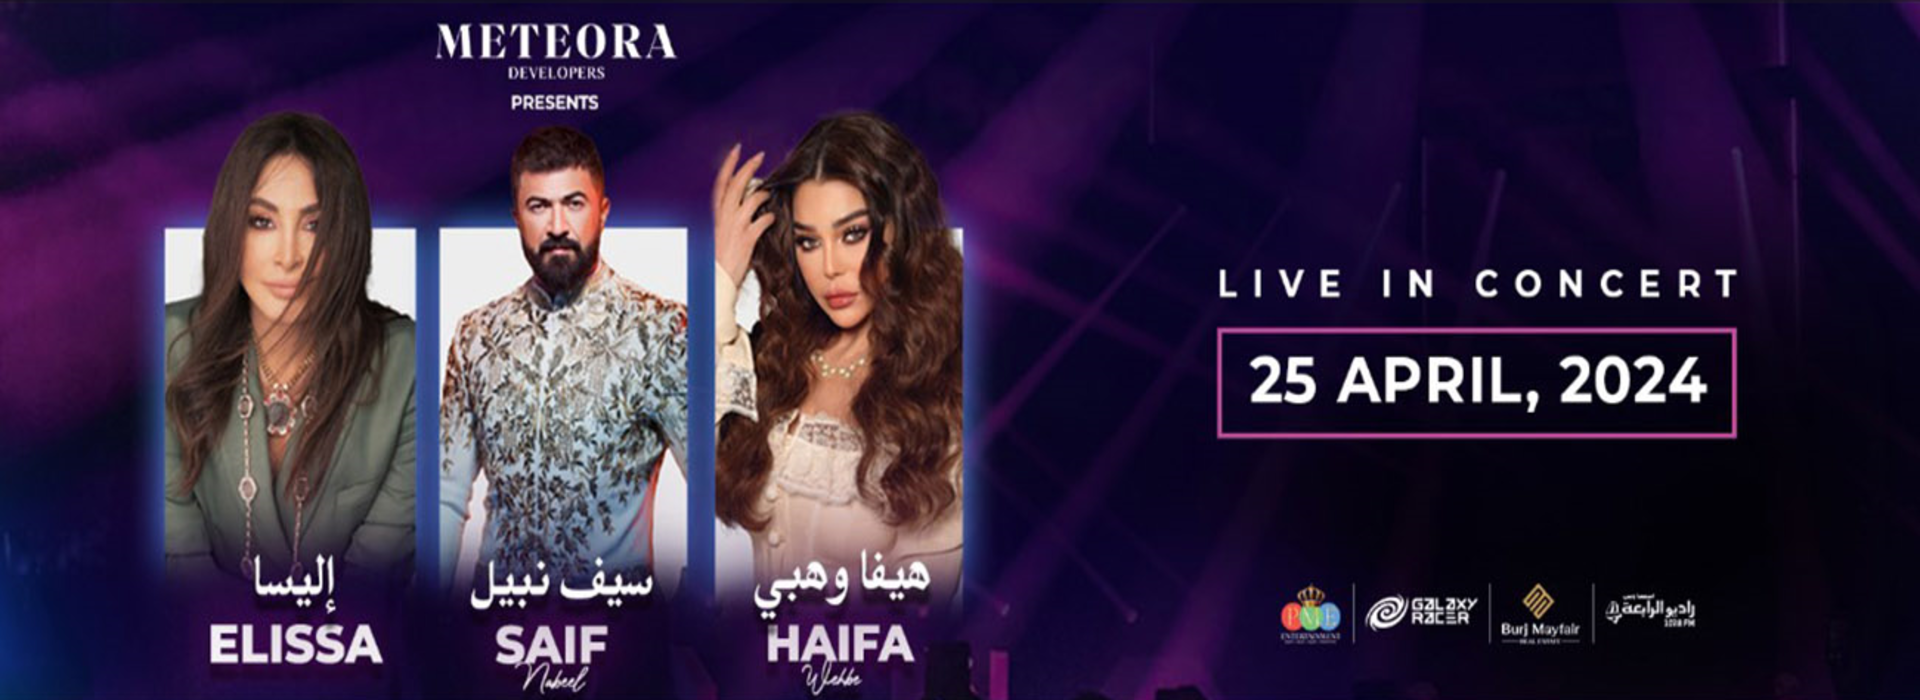 Elissa Saif And Haifa Live Concert In Dubai | Just Dubai